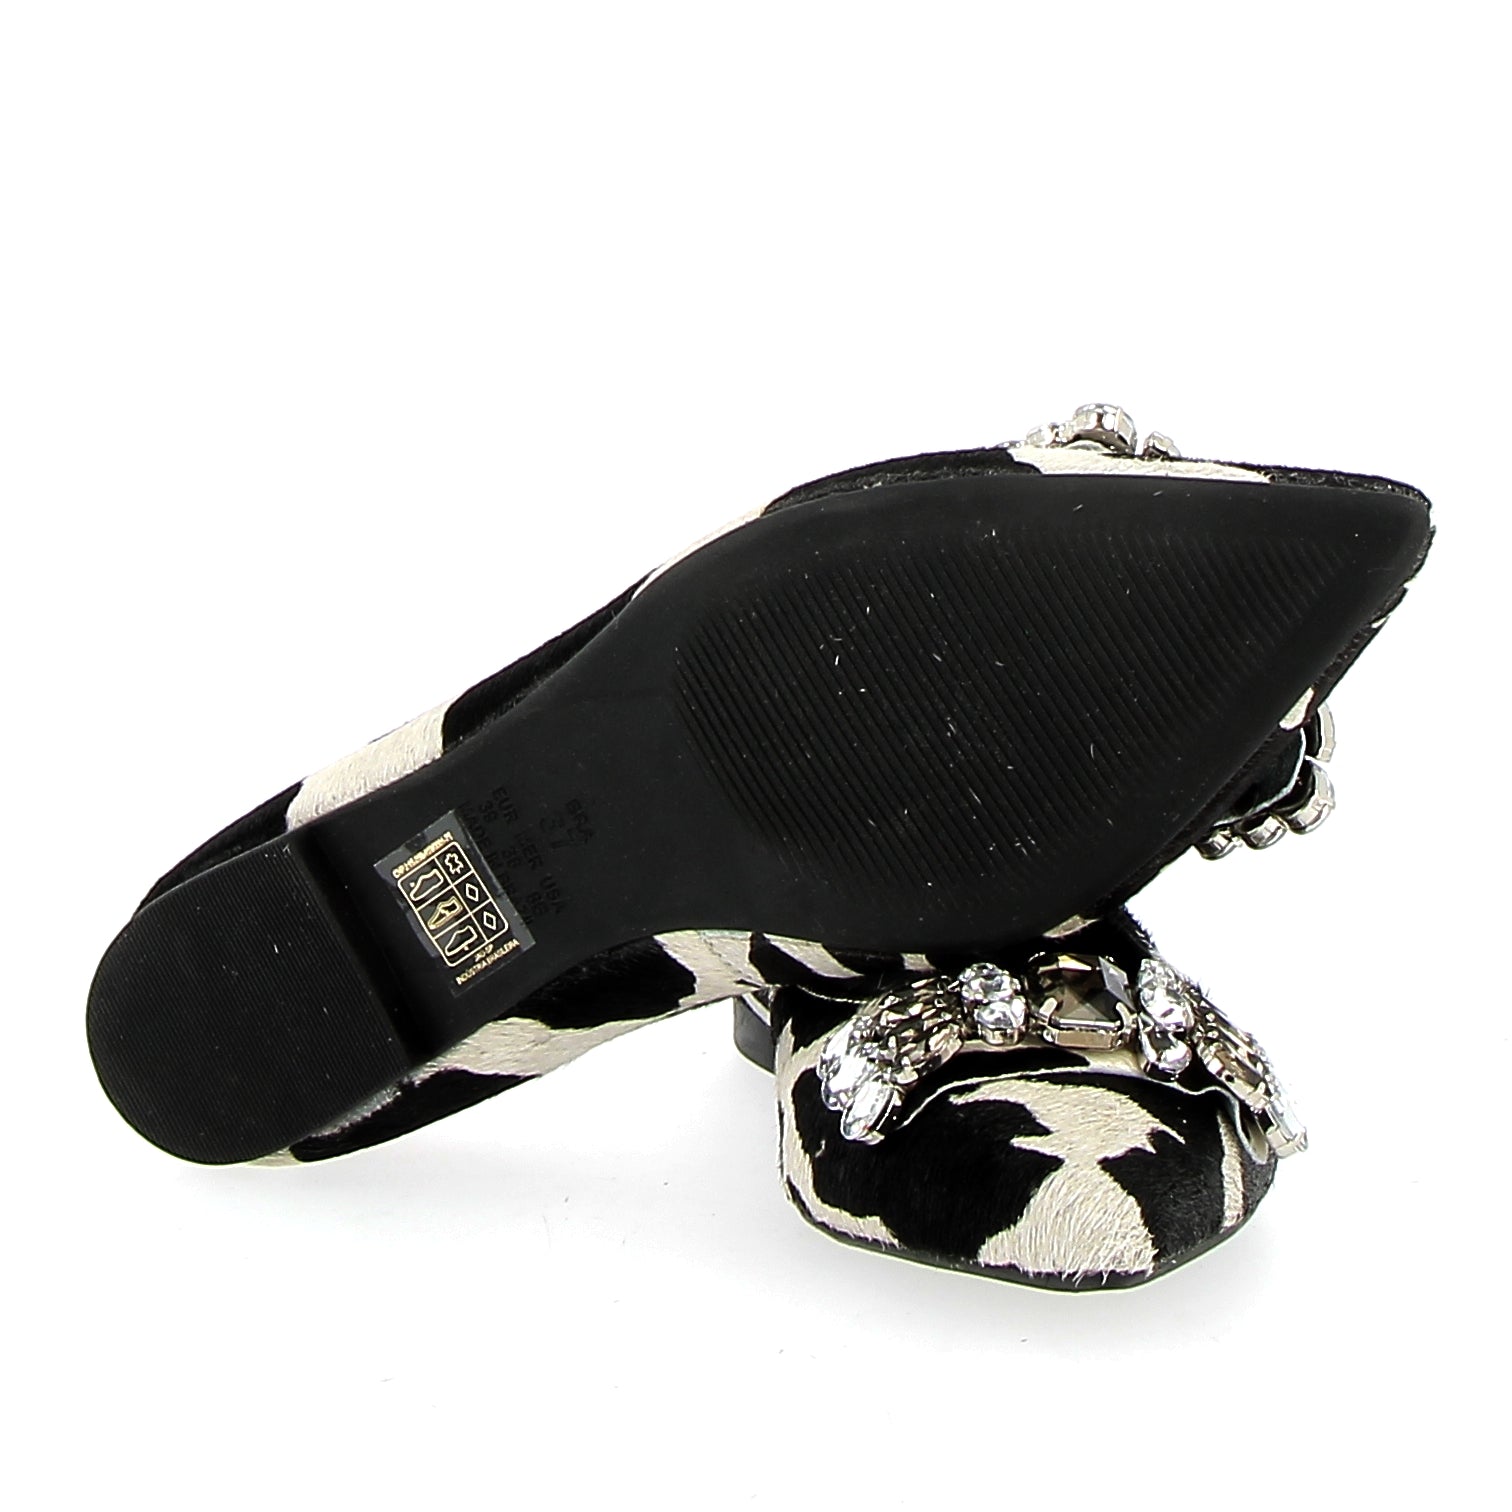 Black and white pony ballerina with rhinestone accessory